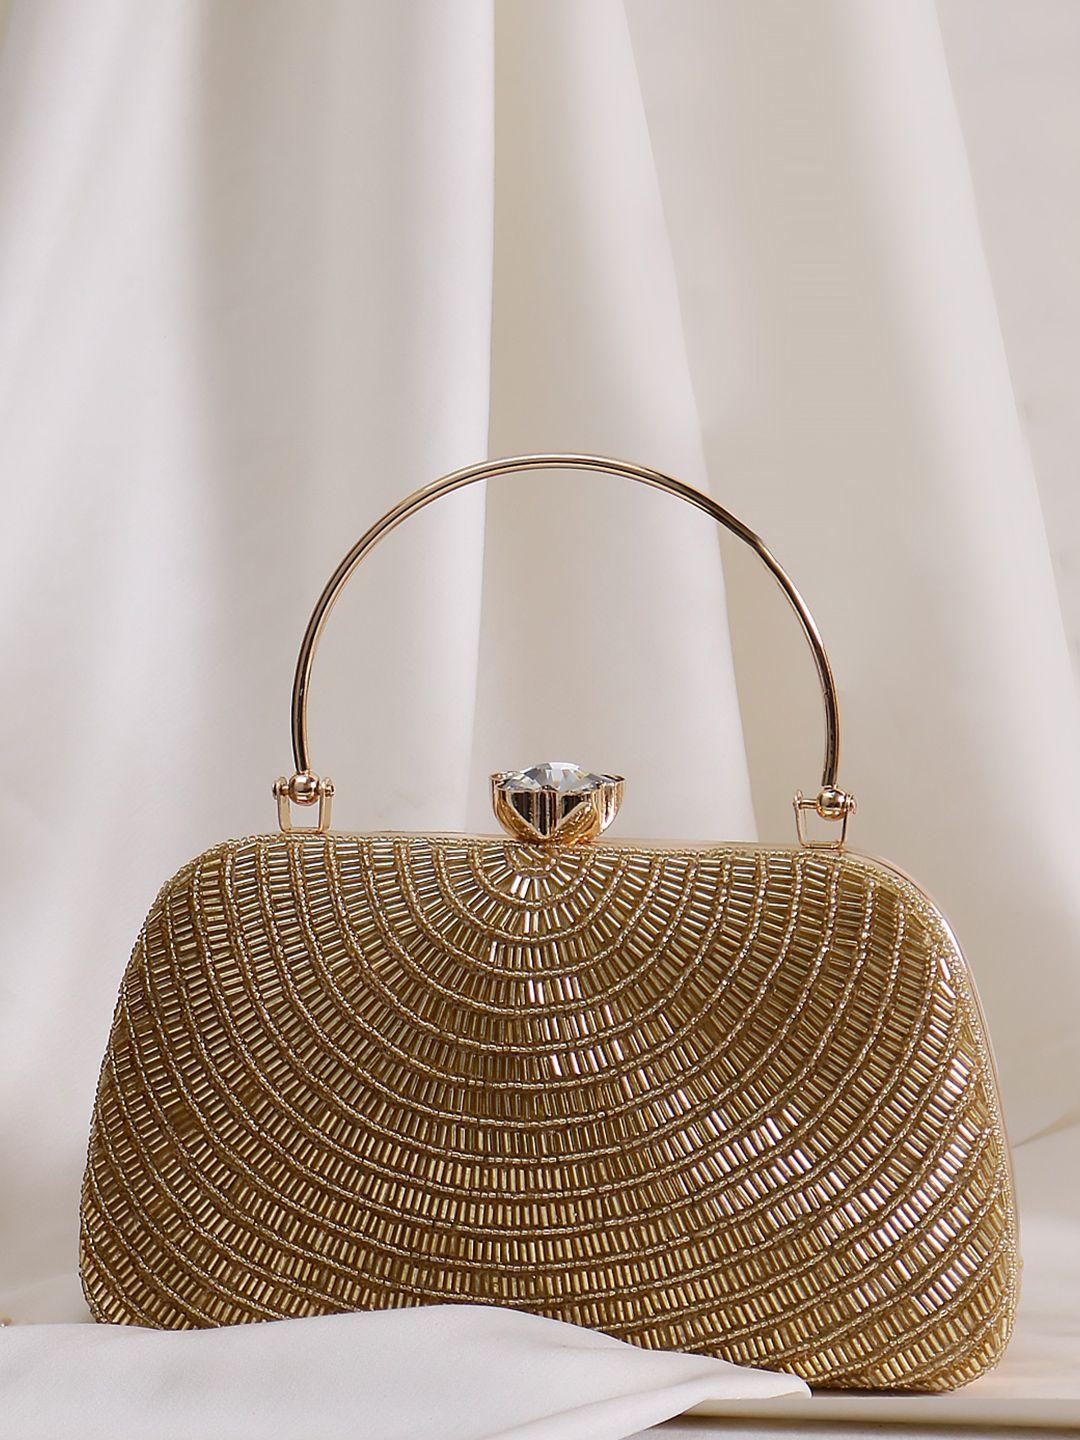 swisni gold-toned embellished purse clutch